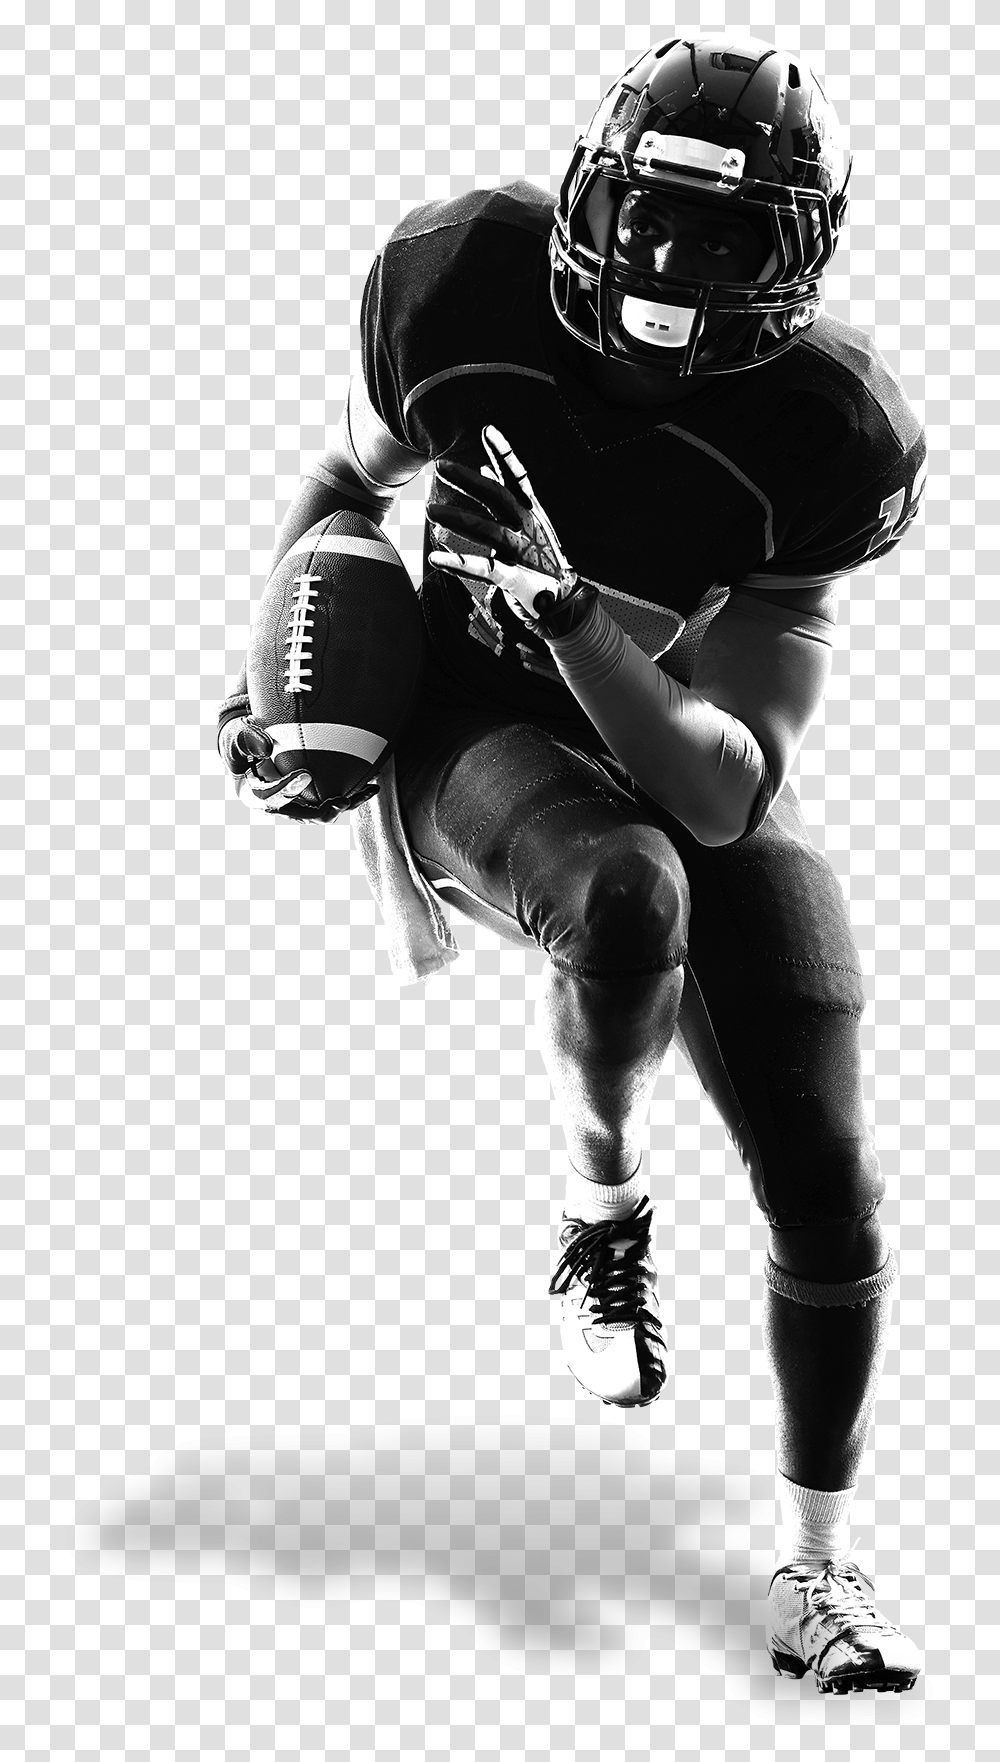 Nfl Draft Minnesota Vikings American Football Player Image, Person, Human, Helmet, Clothing Transparent Png